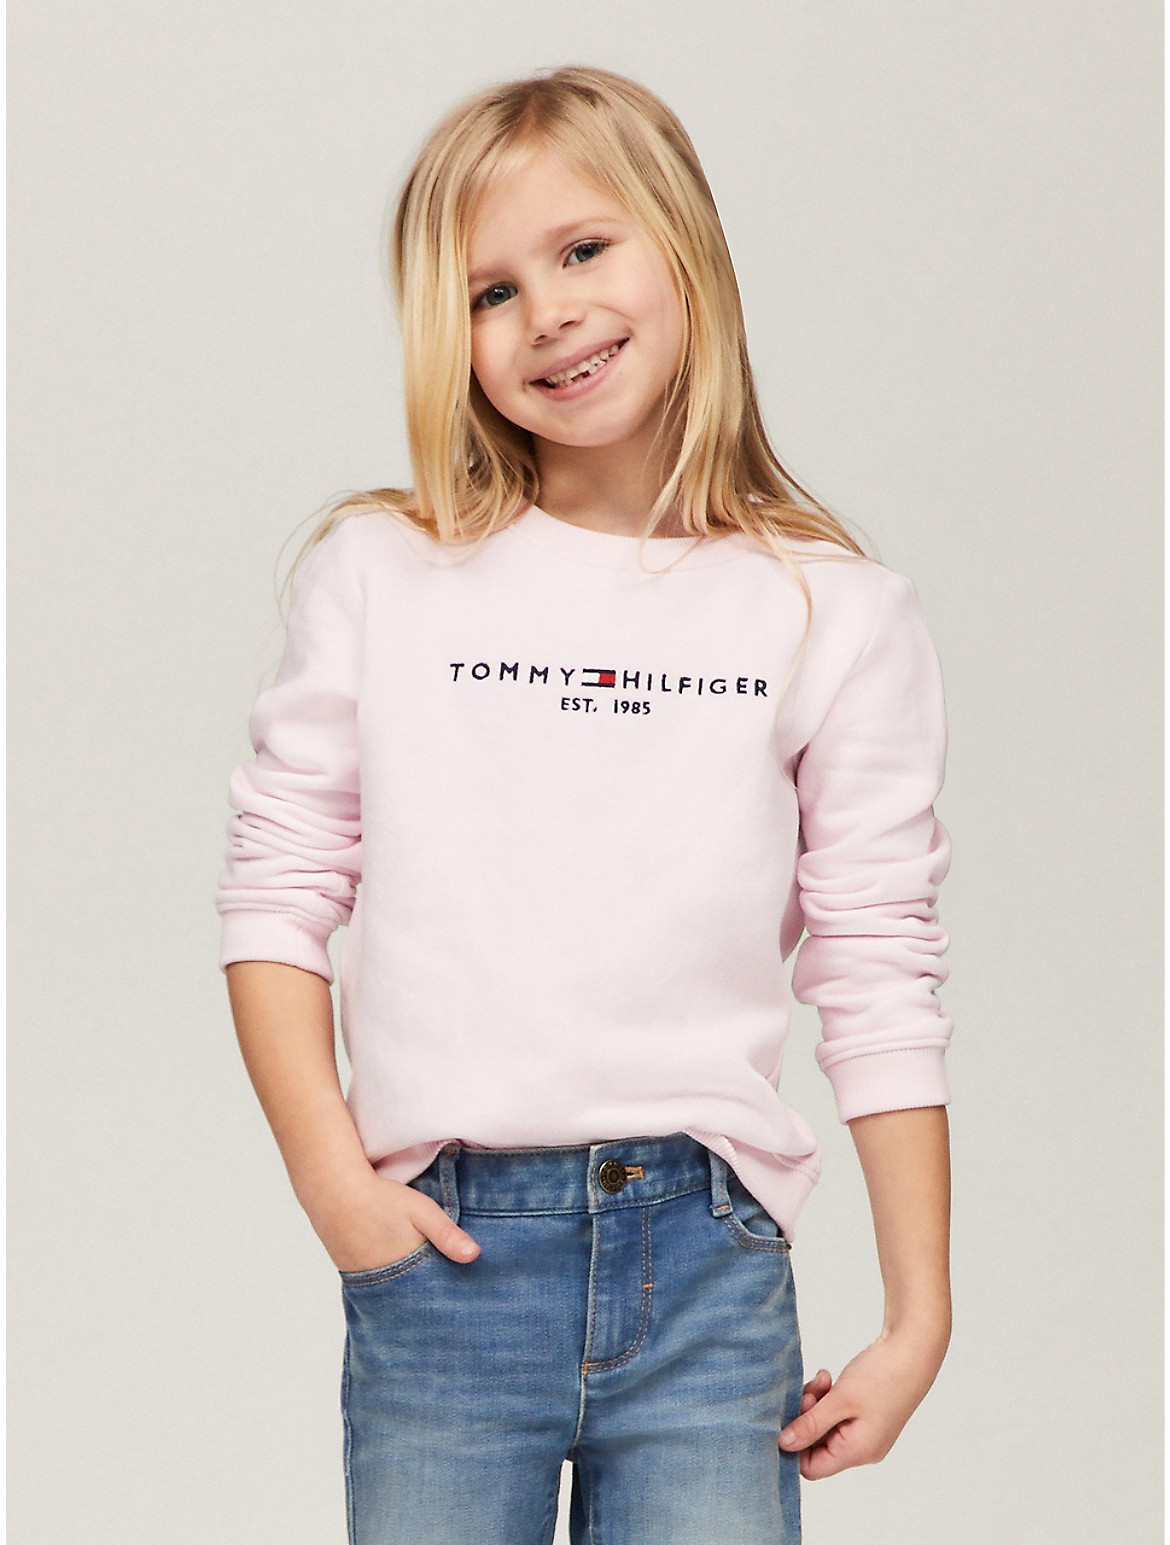 Tommy Hilfiger Girls' Kids' Embroidered Tommy Logo Sweatshirt